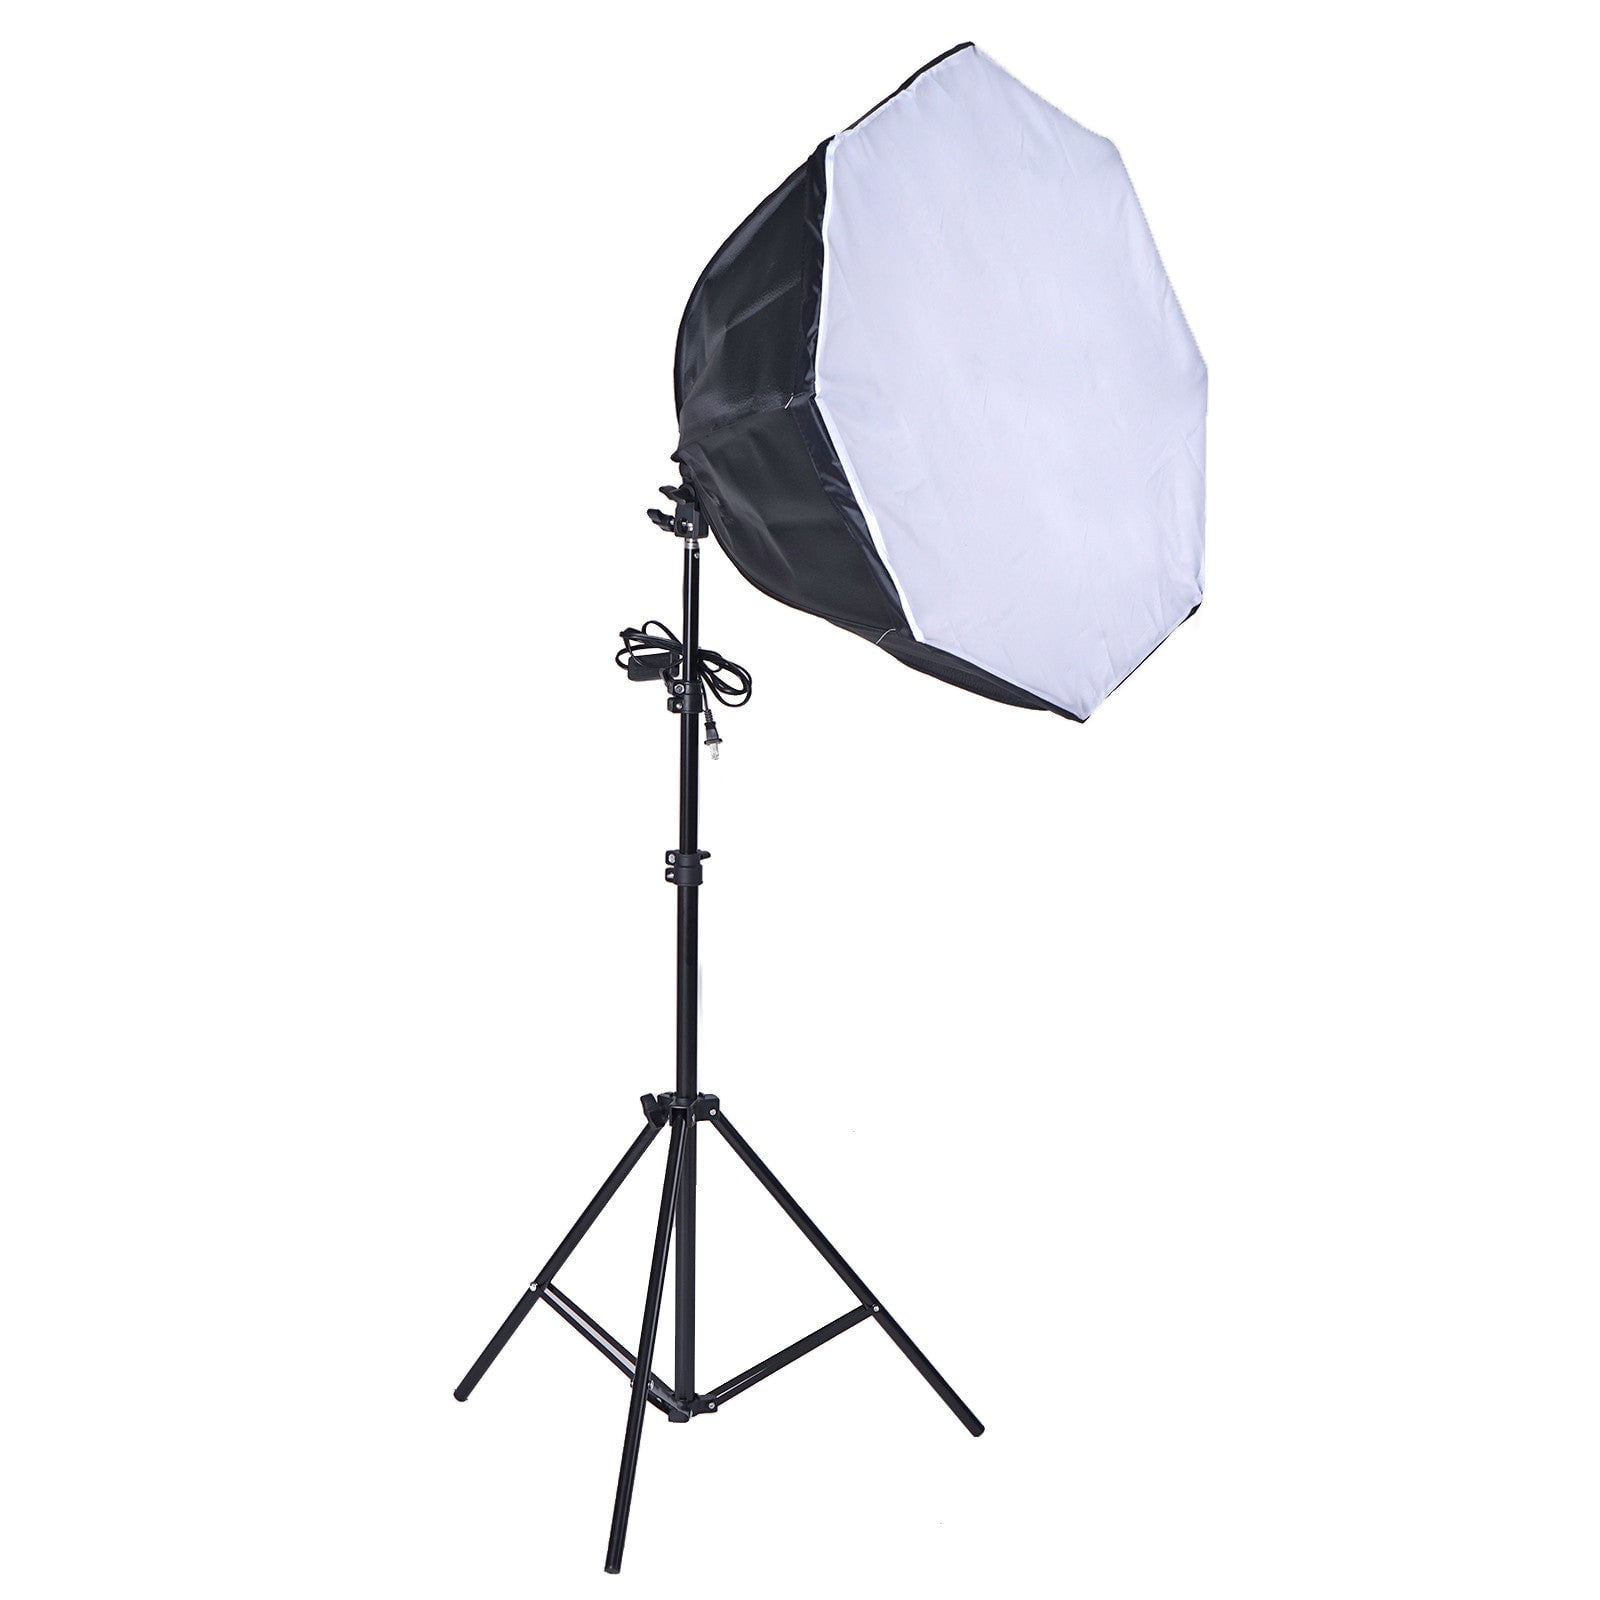 Efavormart 400W Professional Photography Photo Video Portrait Studio Softbox  Lighting Kit 